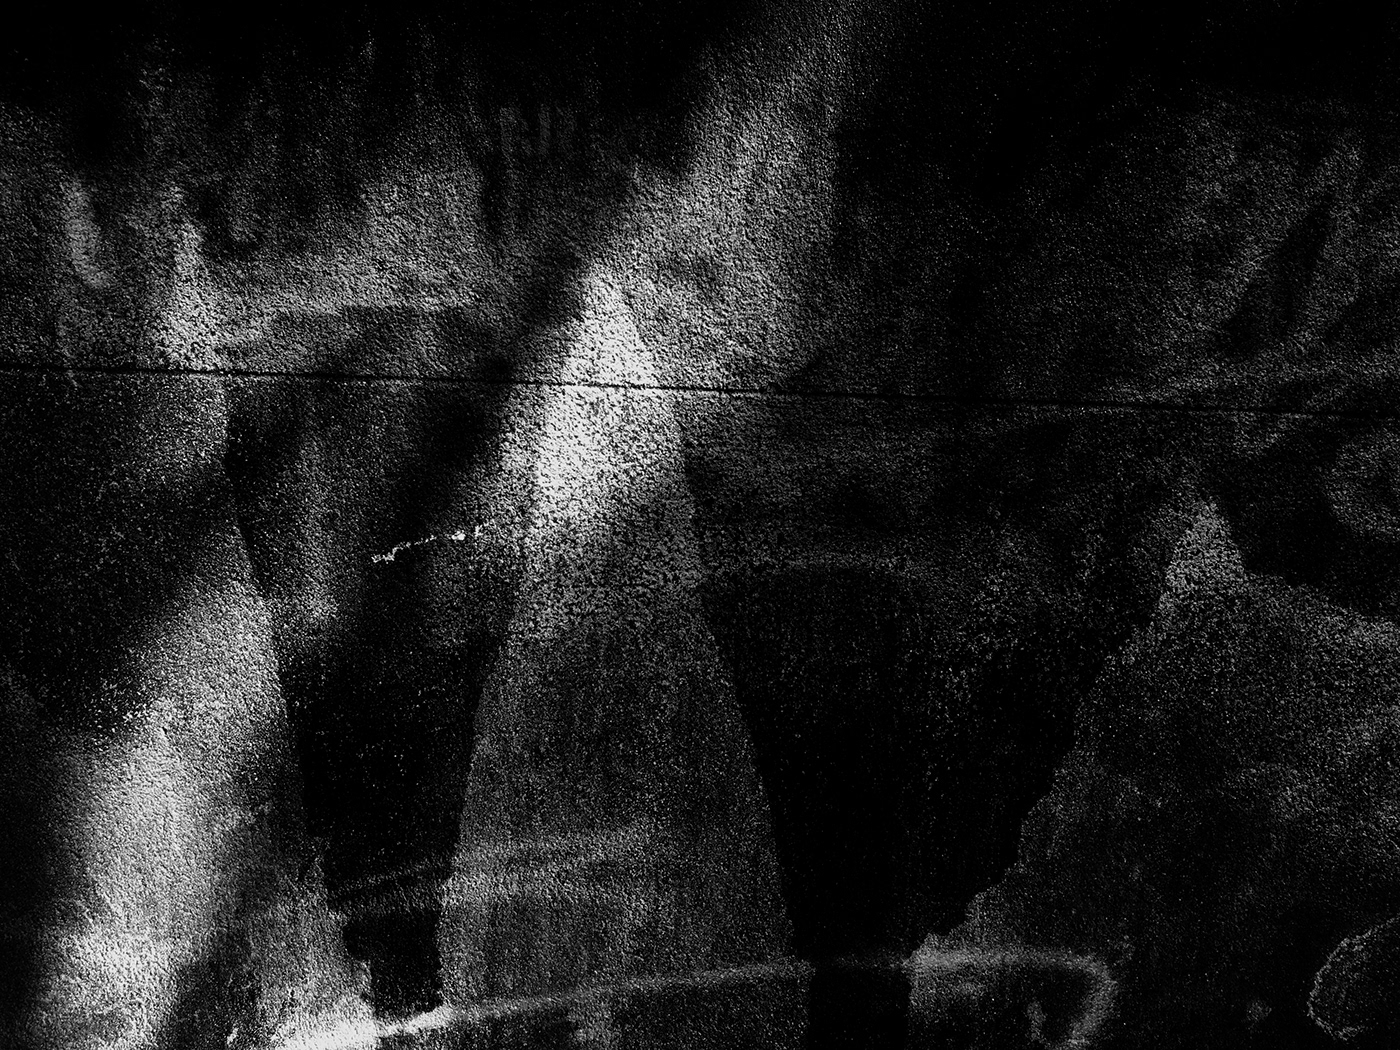 abstract ART IN NATURE bianco e nero blackandwhite blanci y negro leonard rachita monochrome noir et blanc trace traces